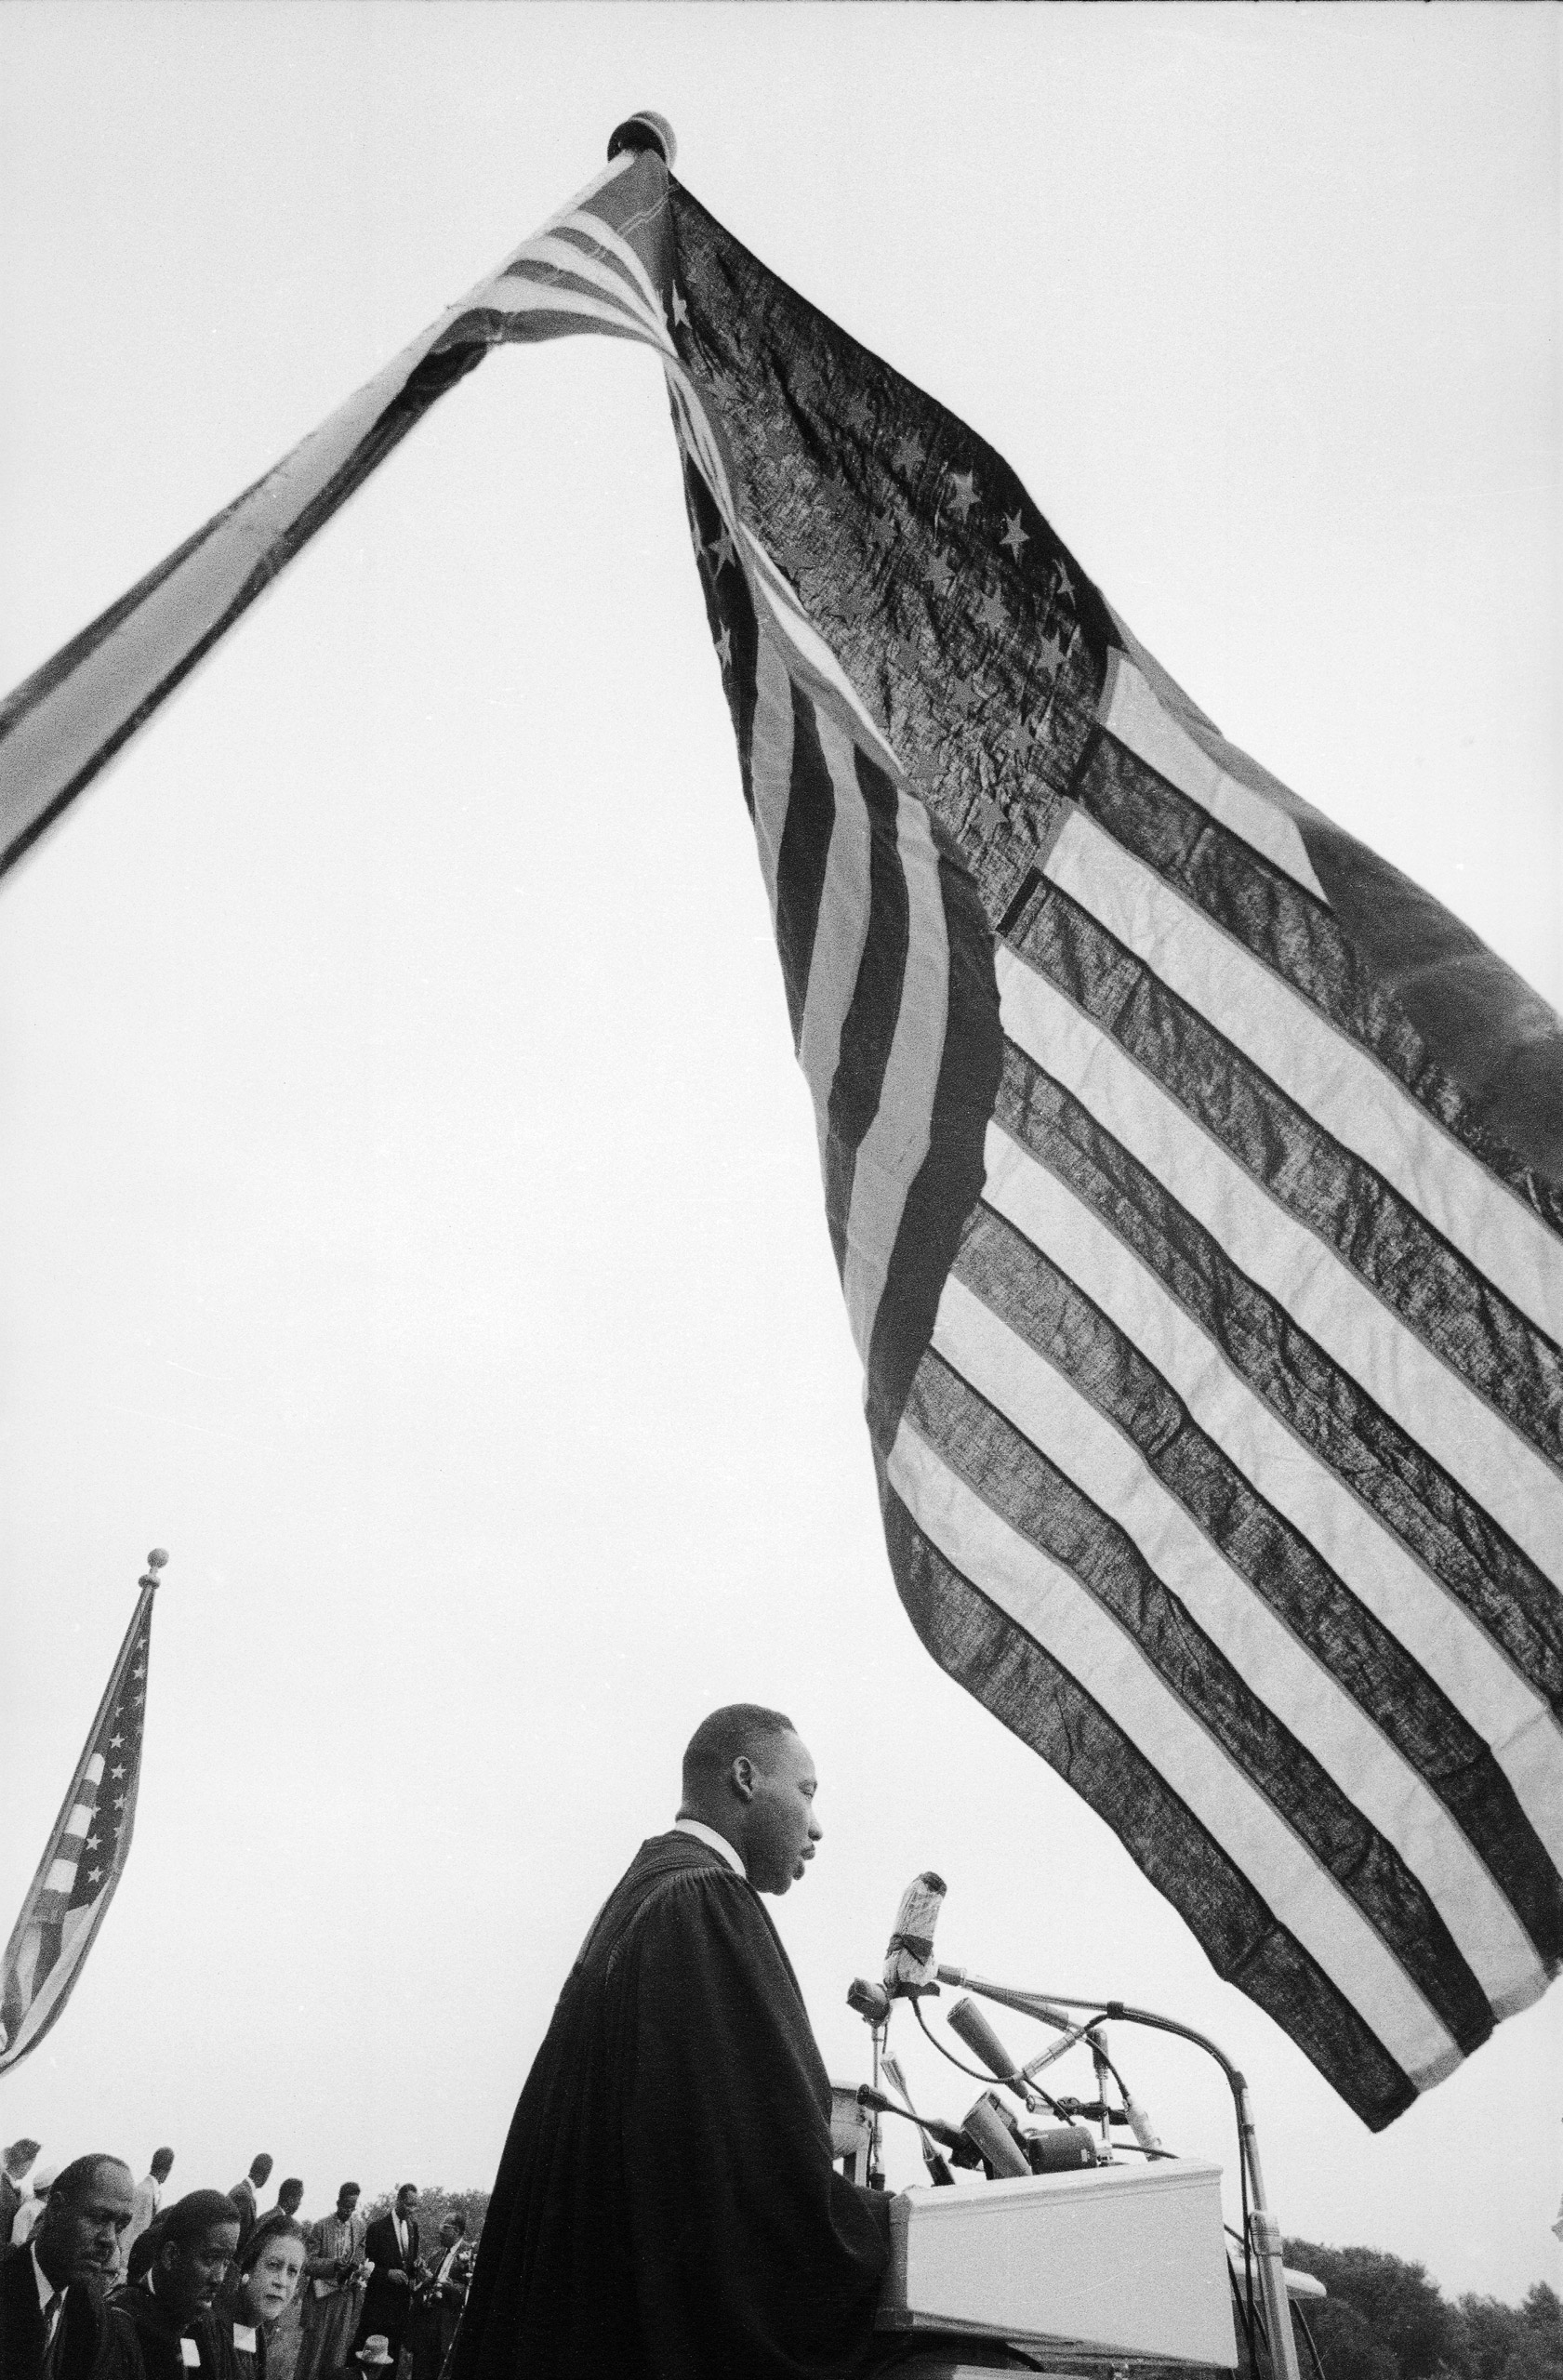 Rev. Martin Luther King Jr. speaking at 'Prayer Pilgrimage for Freedom' at Lincoln Memorial, 1957.